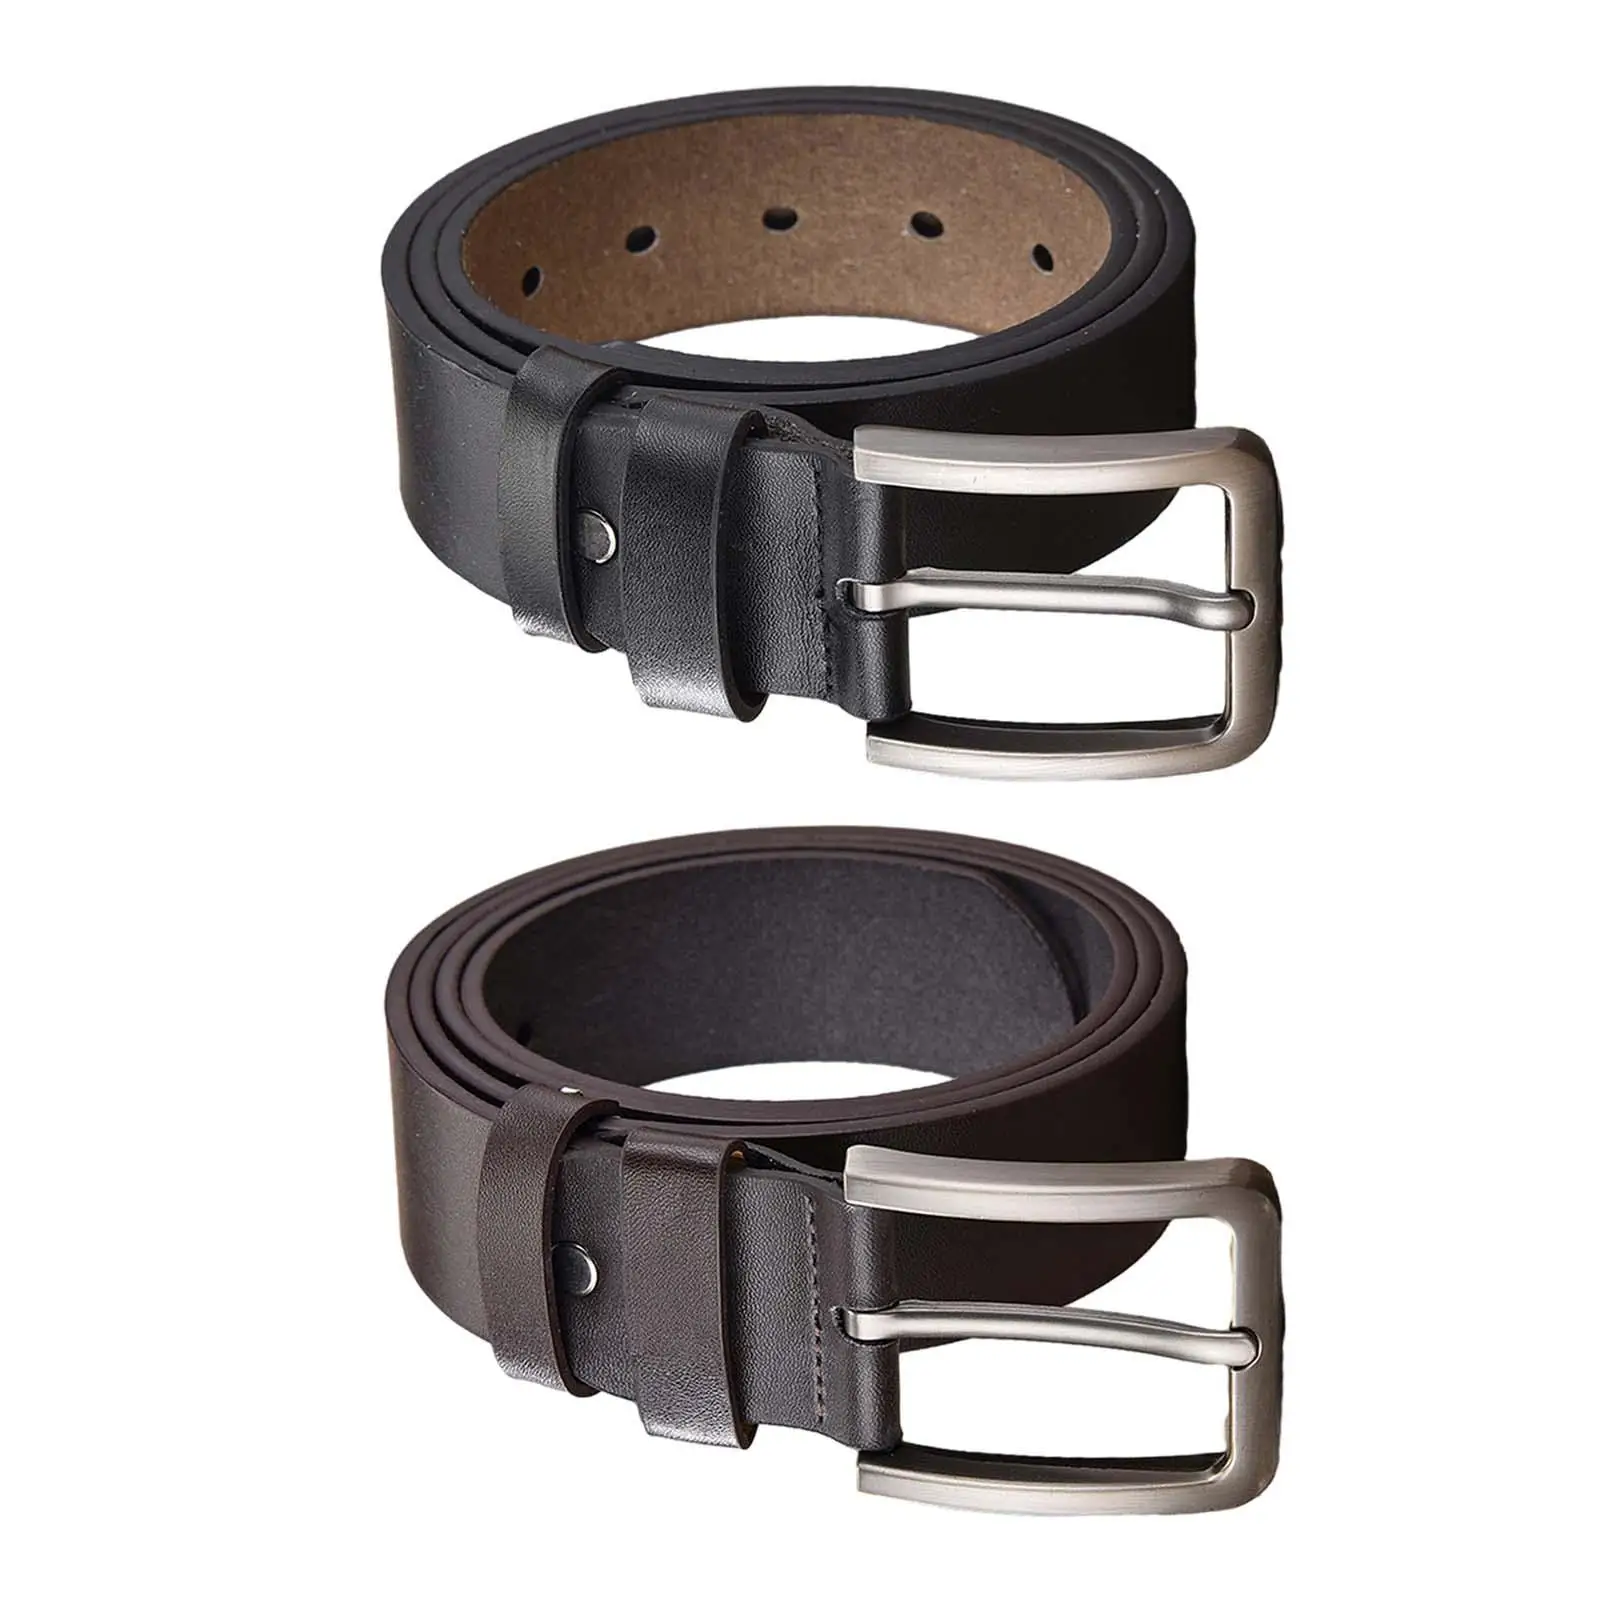 Men Dress Belt Adjustable 120cm Long Metal Pin Buckle Casual Waist Strap PU Leather Belt for Travel Uniform Trousers suits Jeans